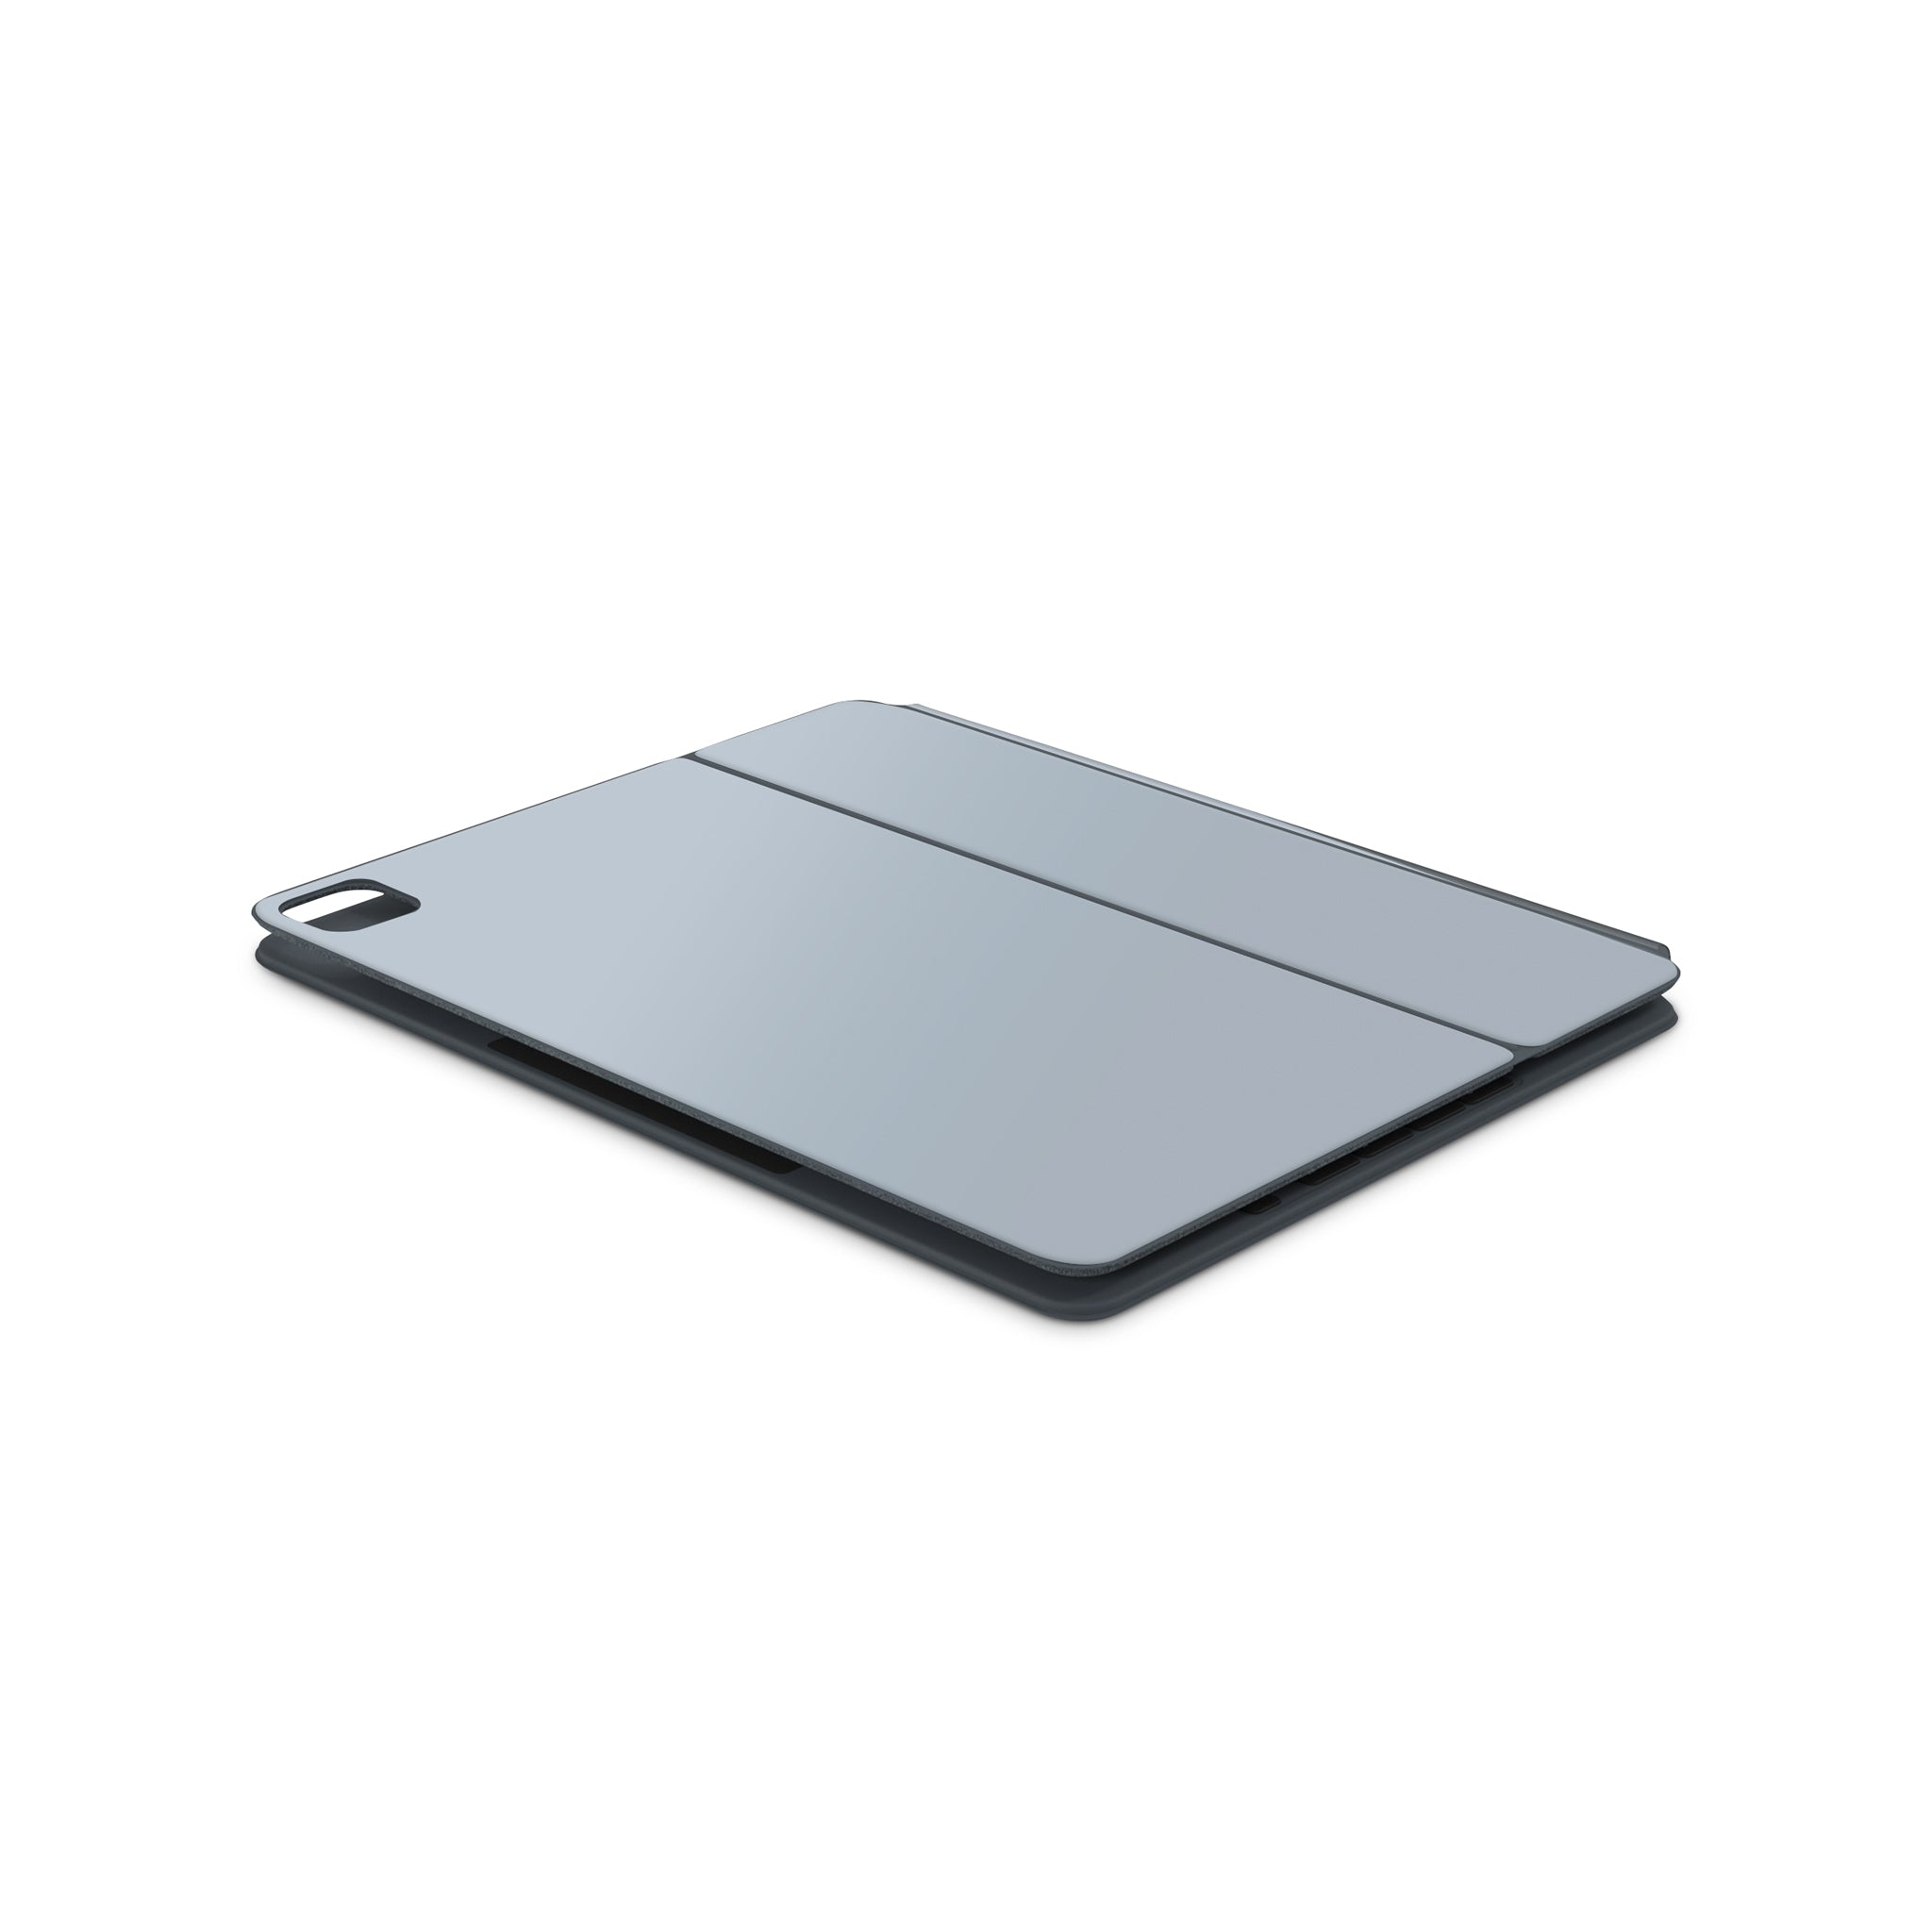 UNIQFIND Soft Blue Magic Keyboard Skin for iPad